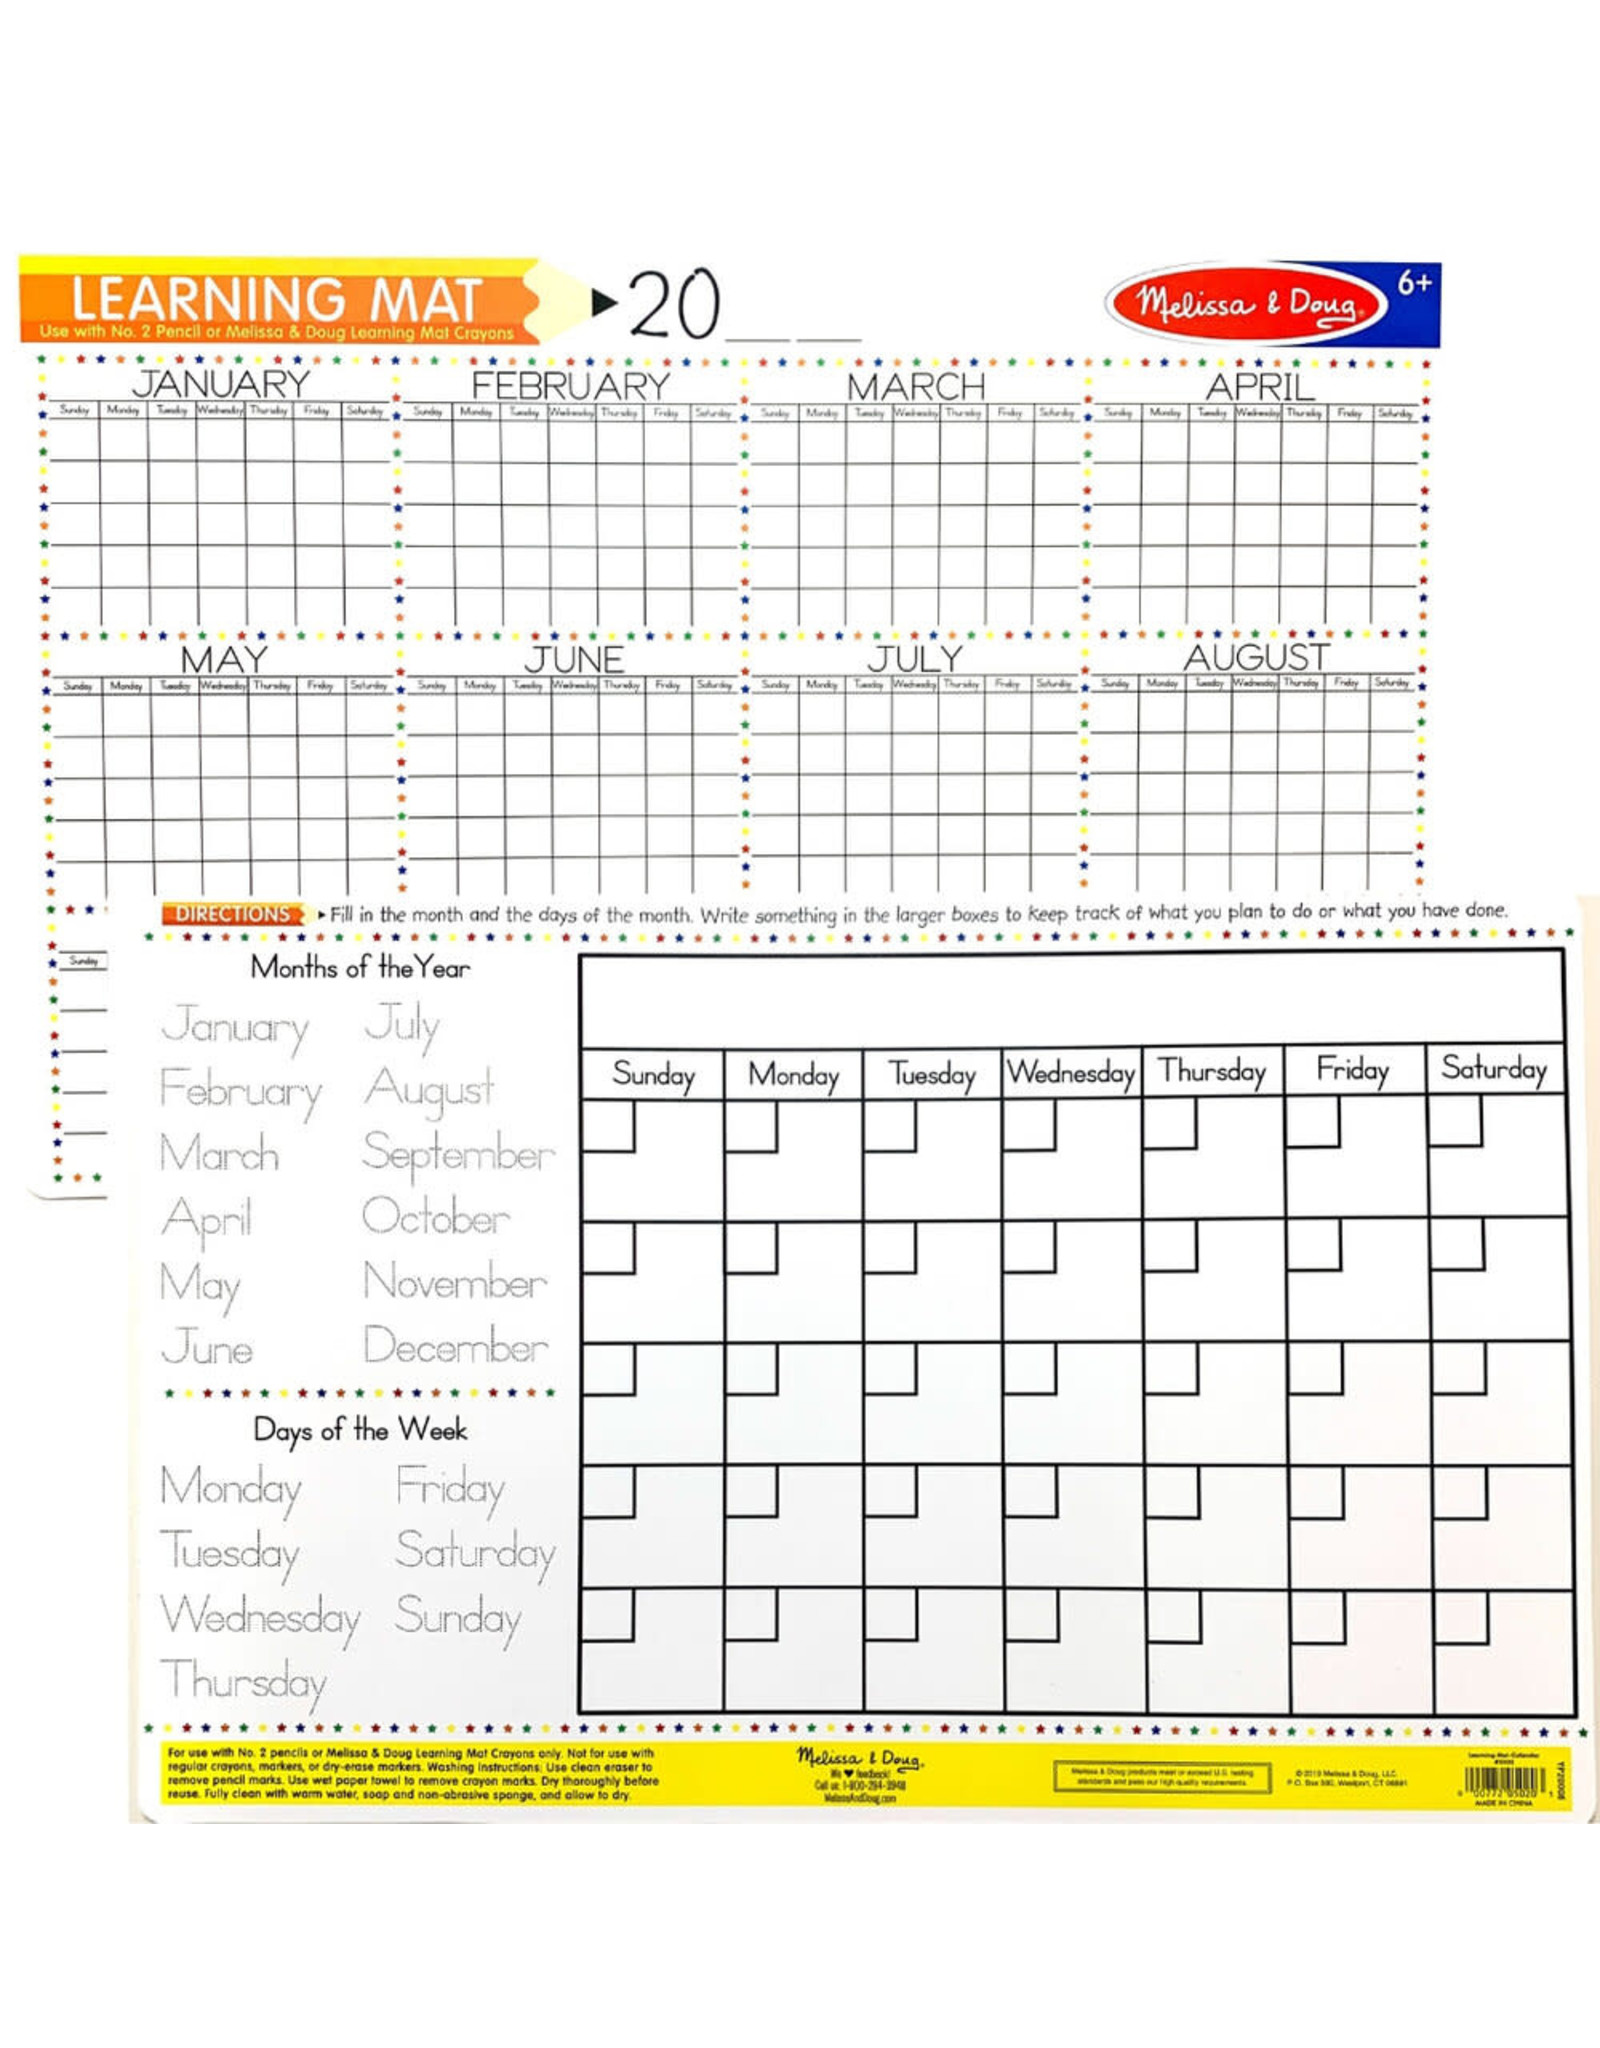 Melissa & Doug Melissa & Doug: Learning Mat Calendar